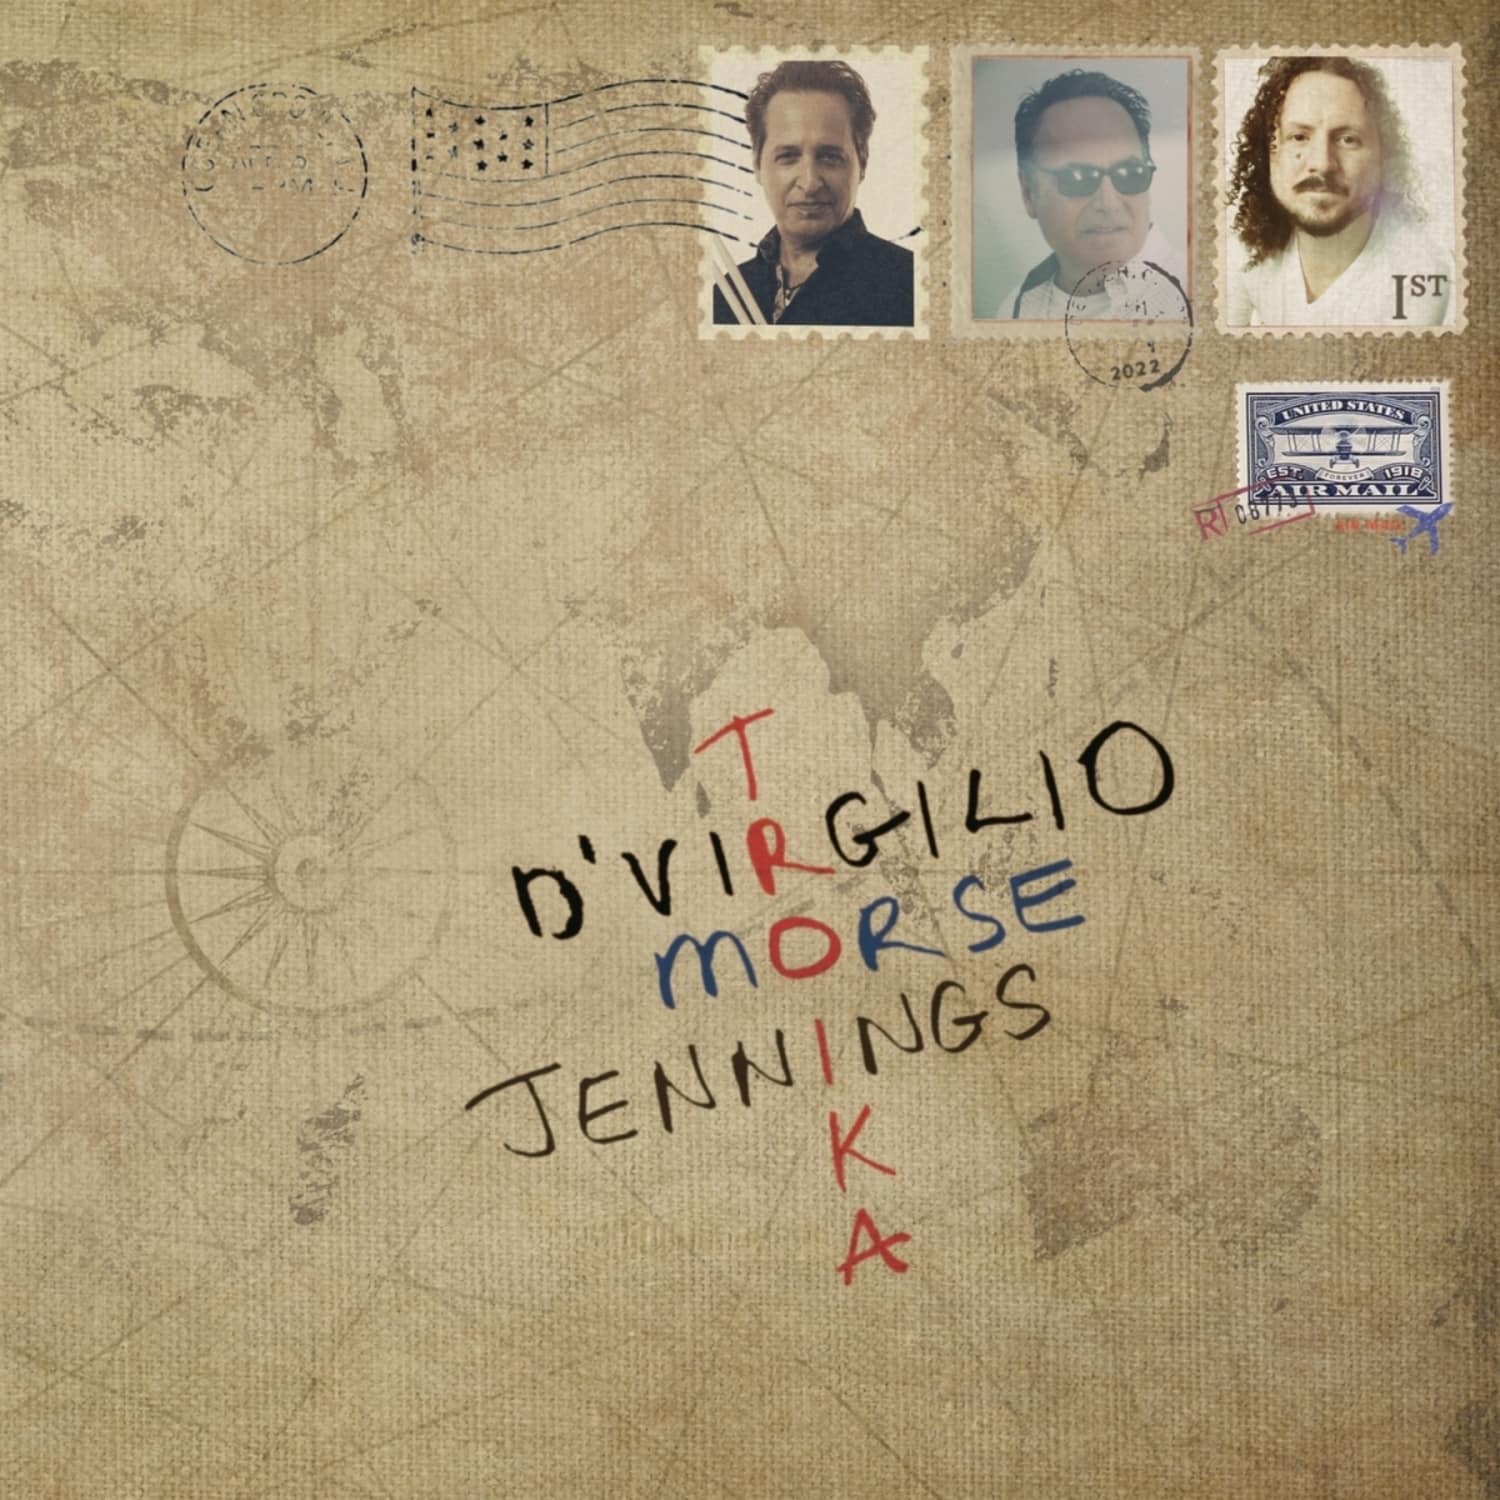 Morse D Virgilio & Jennings - TROIKA